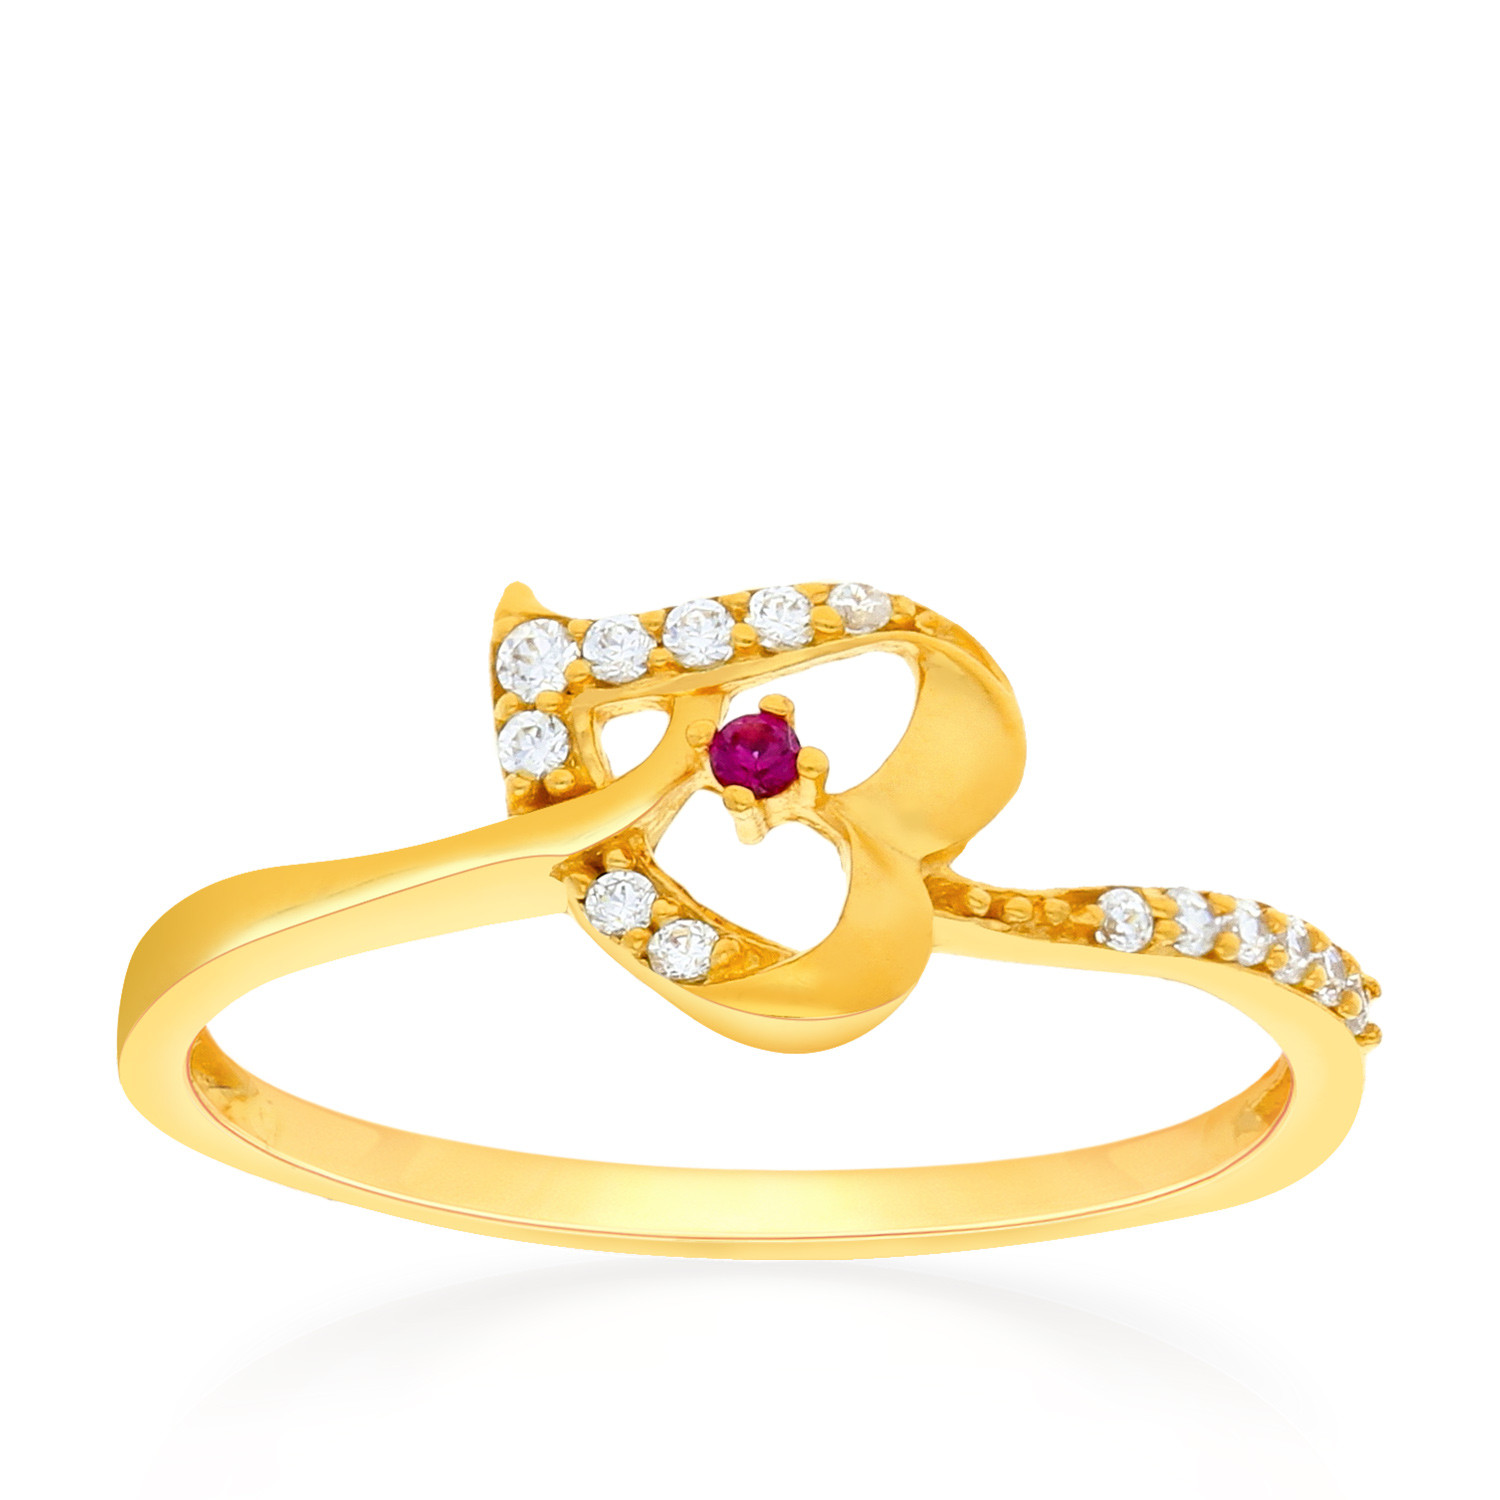 Female Gold Diamond Ladies Ring at Rs 13500 in Surat | ID: 25889928055